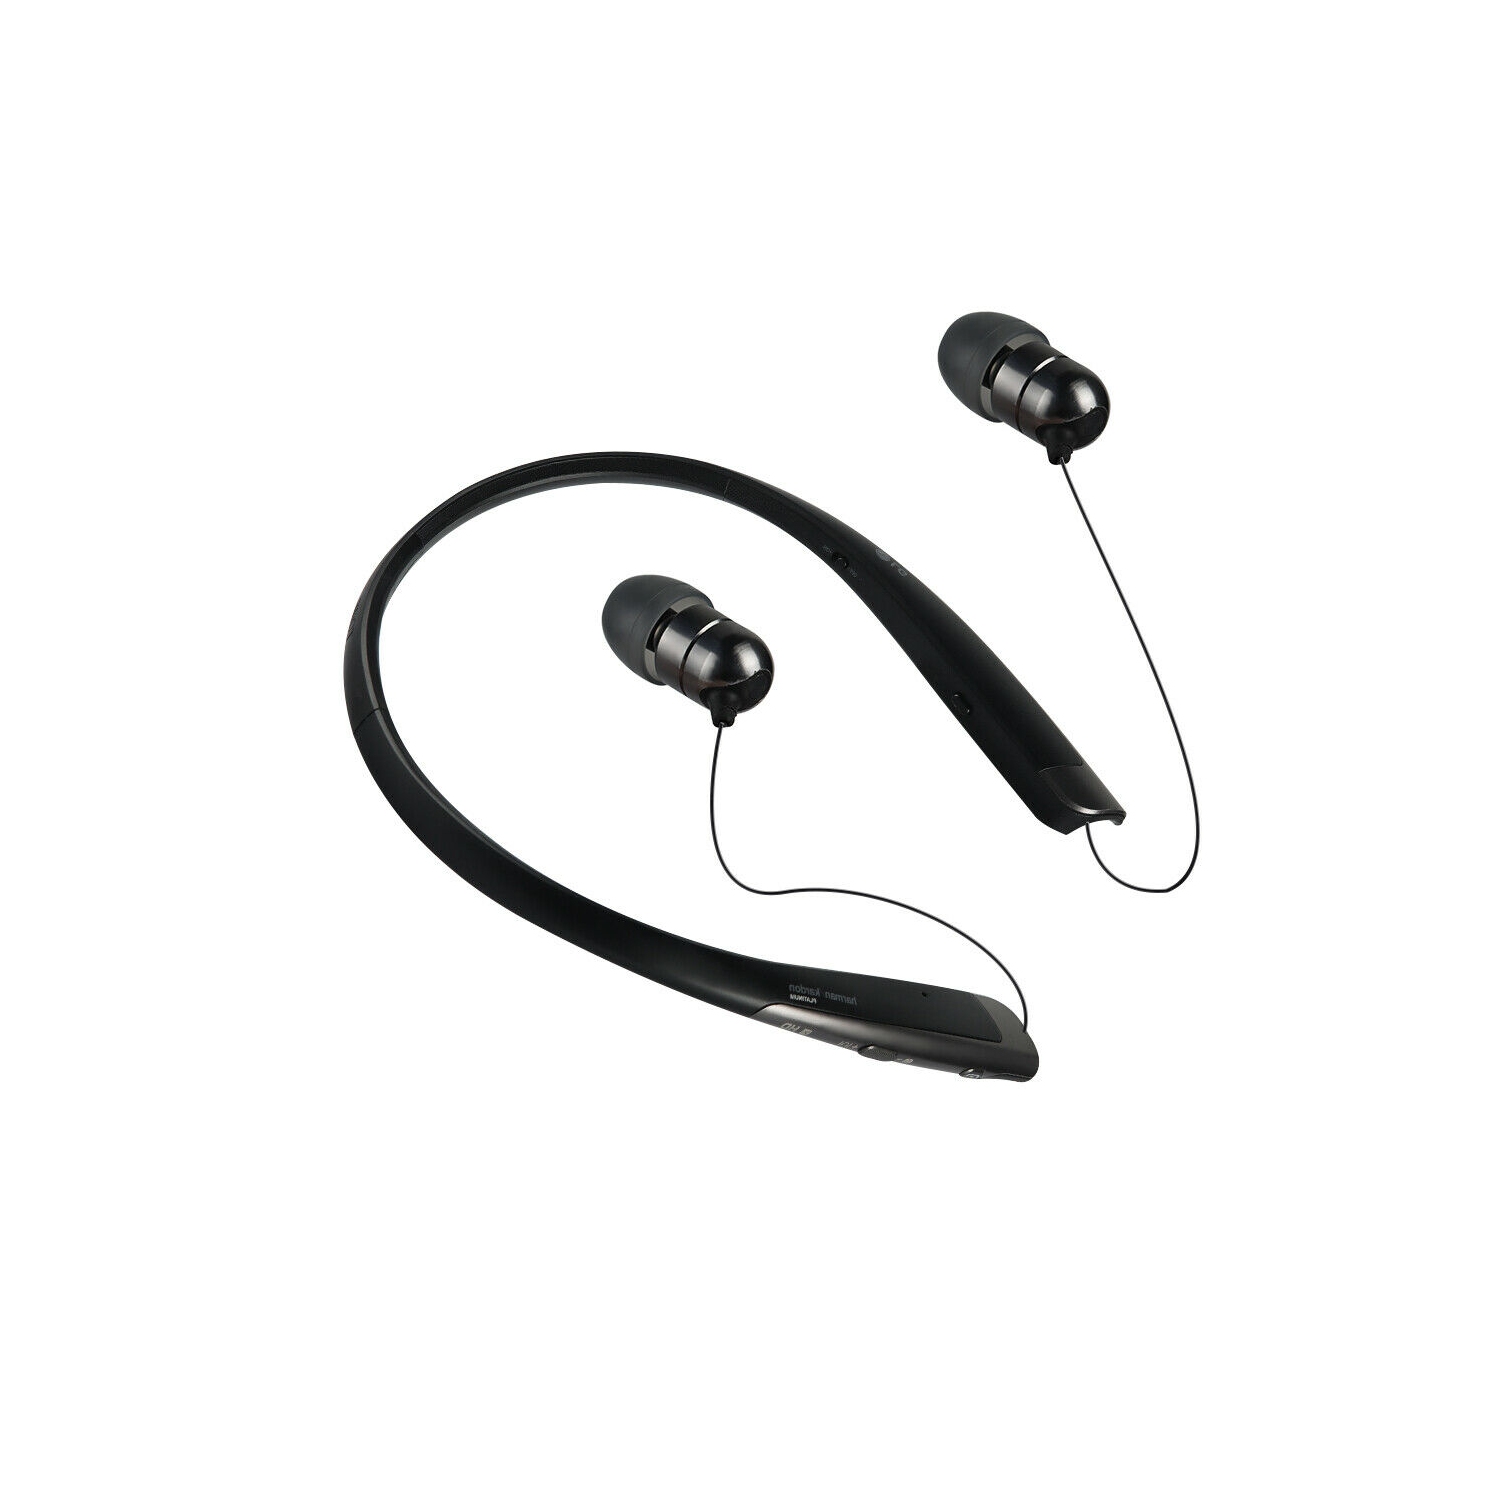 Refurbished (Good) - LG Tone Platinum Bluetooth Headset Wireless In-Ear Earphones - Black (HBS-1100)